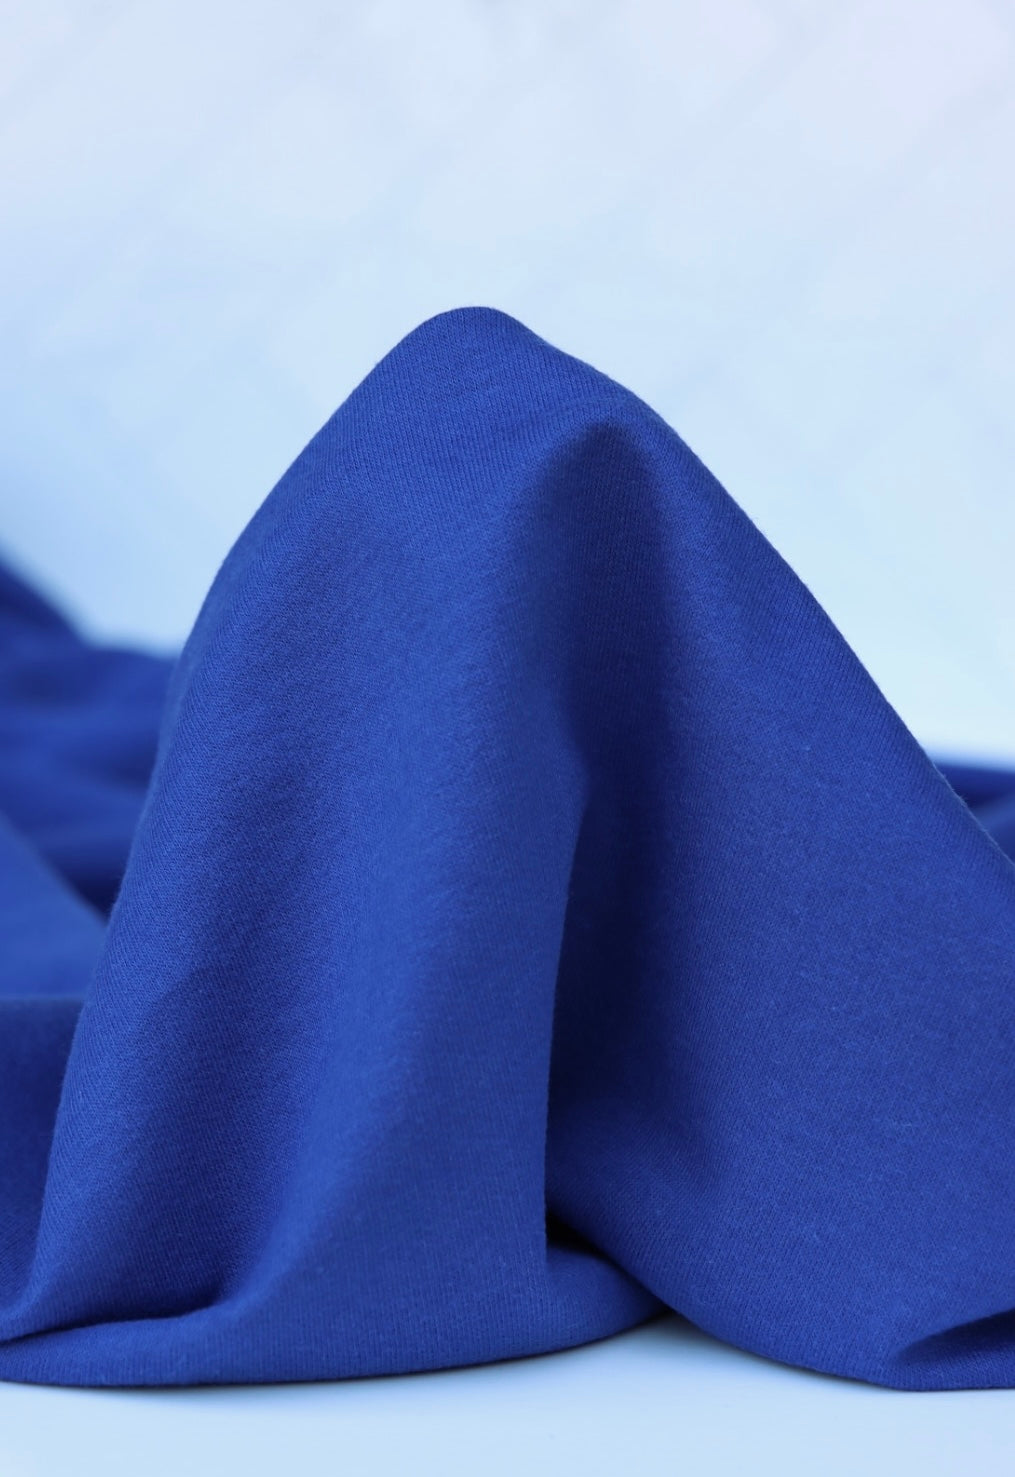 royal blue cotton fabric